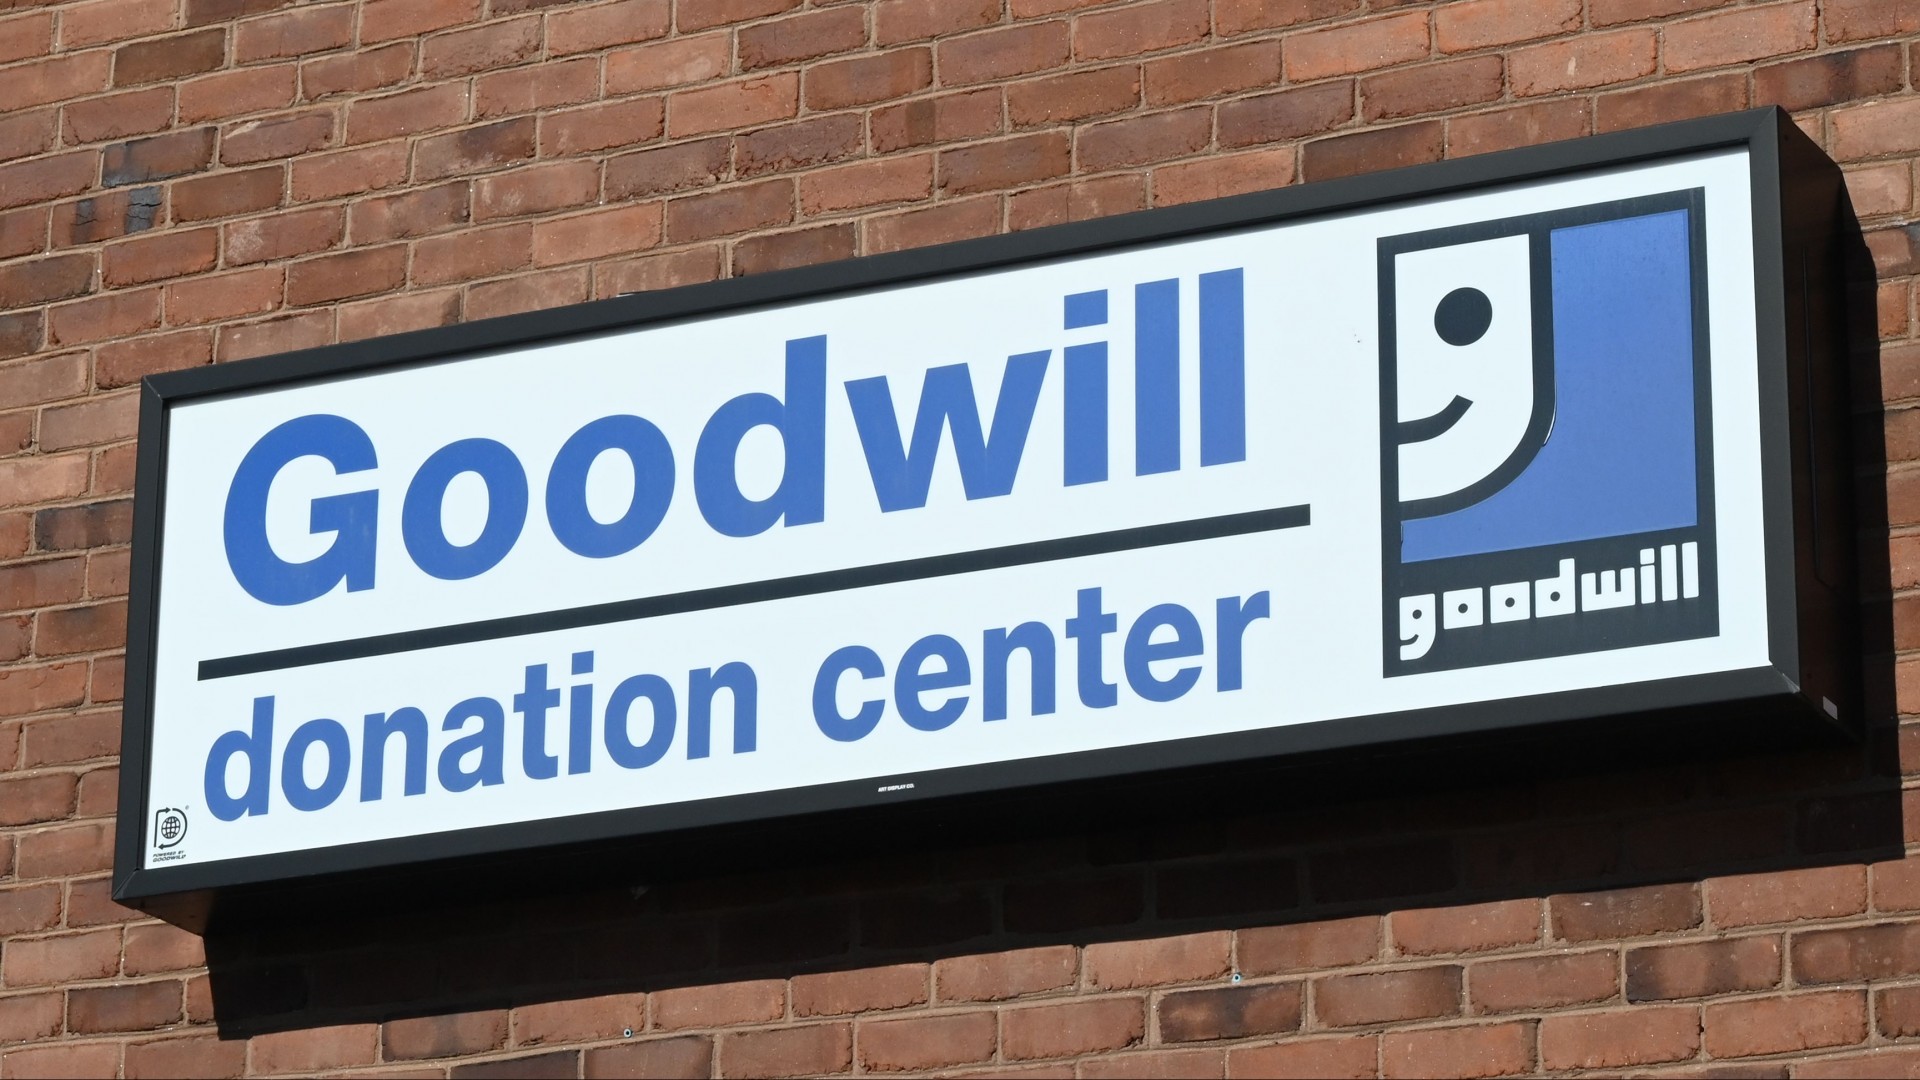 Goodwill en crisis por el coronavirus, pide ayuda para no entrar en bancarrota